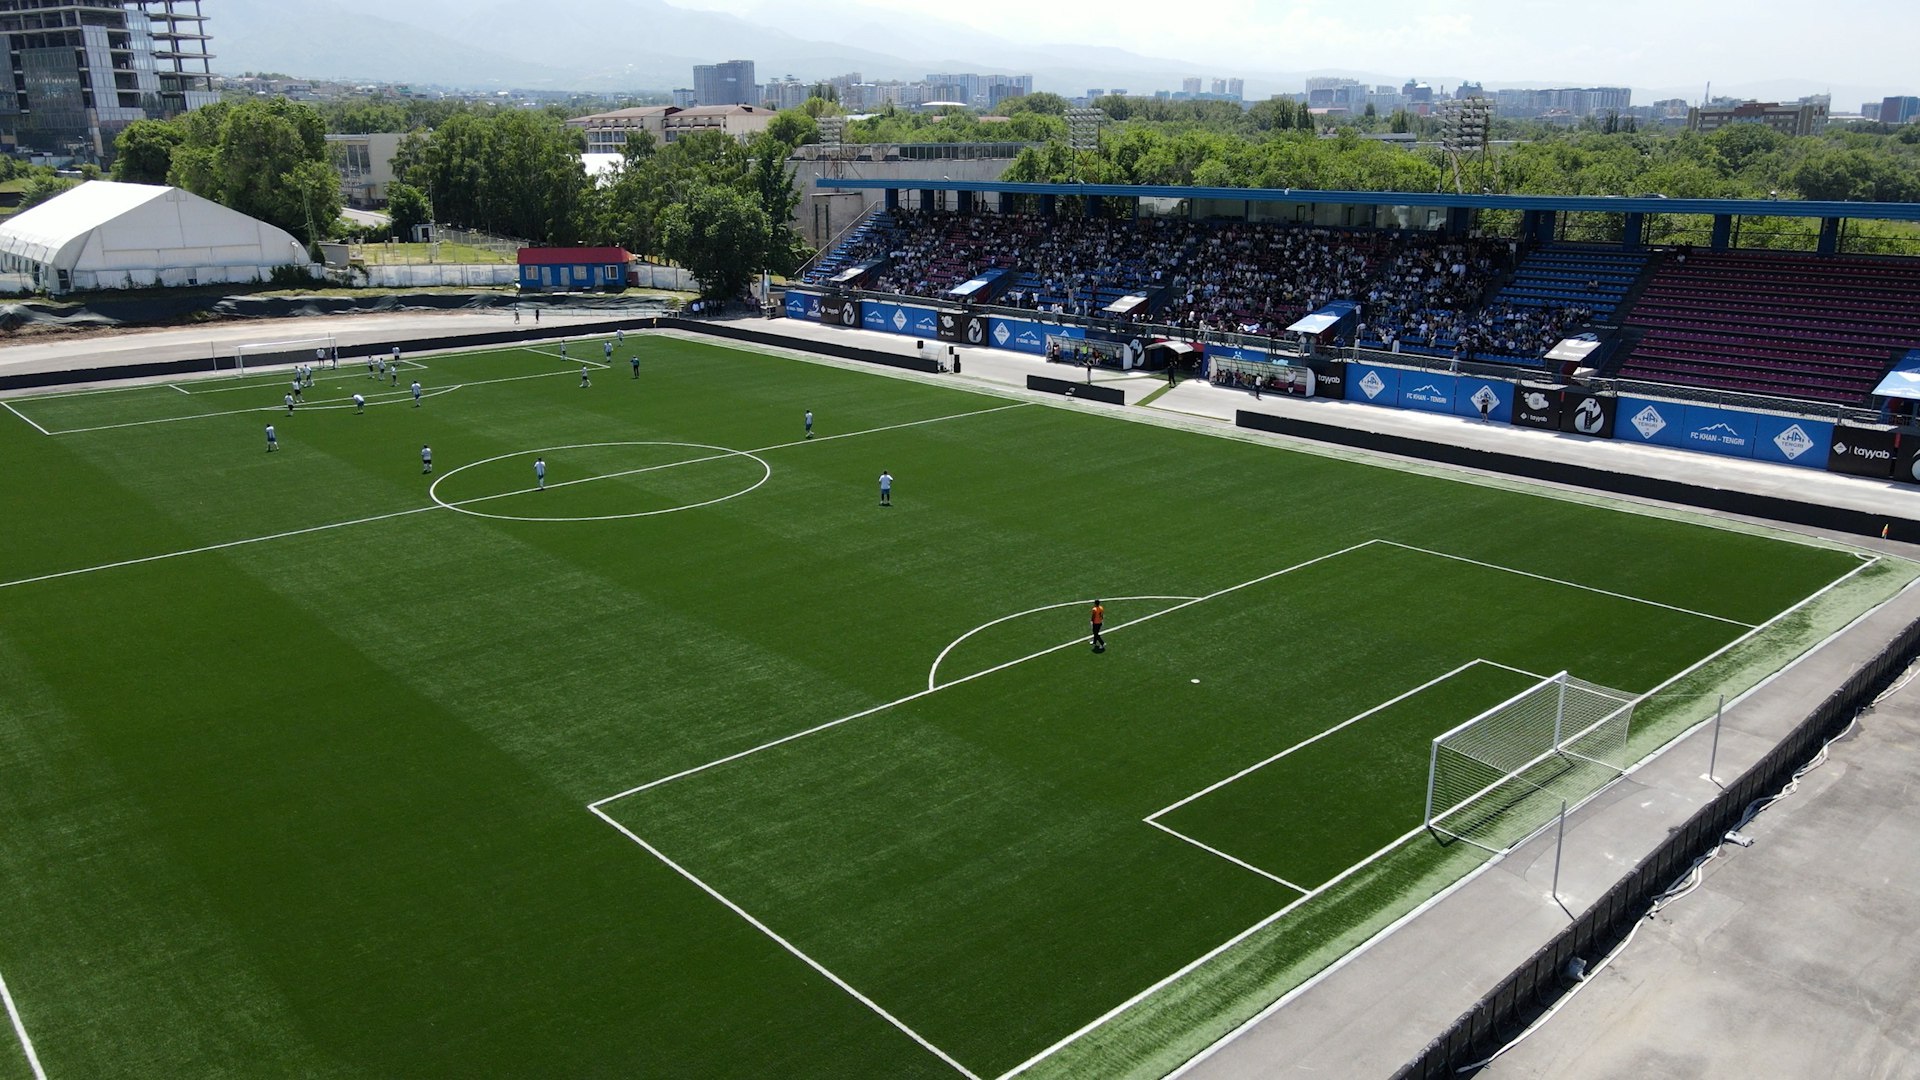 KazNU stadium was commissioned on Symbols Day